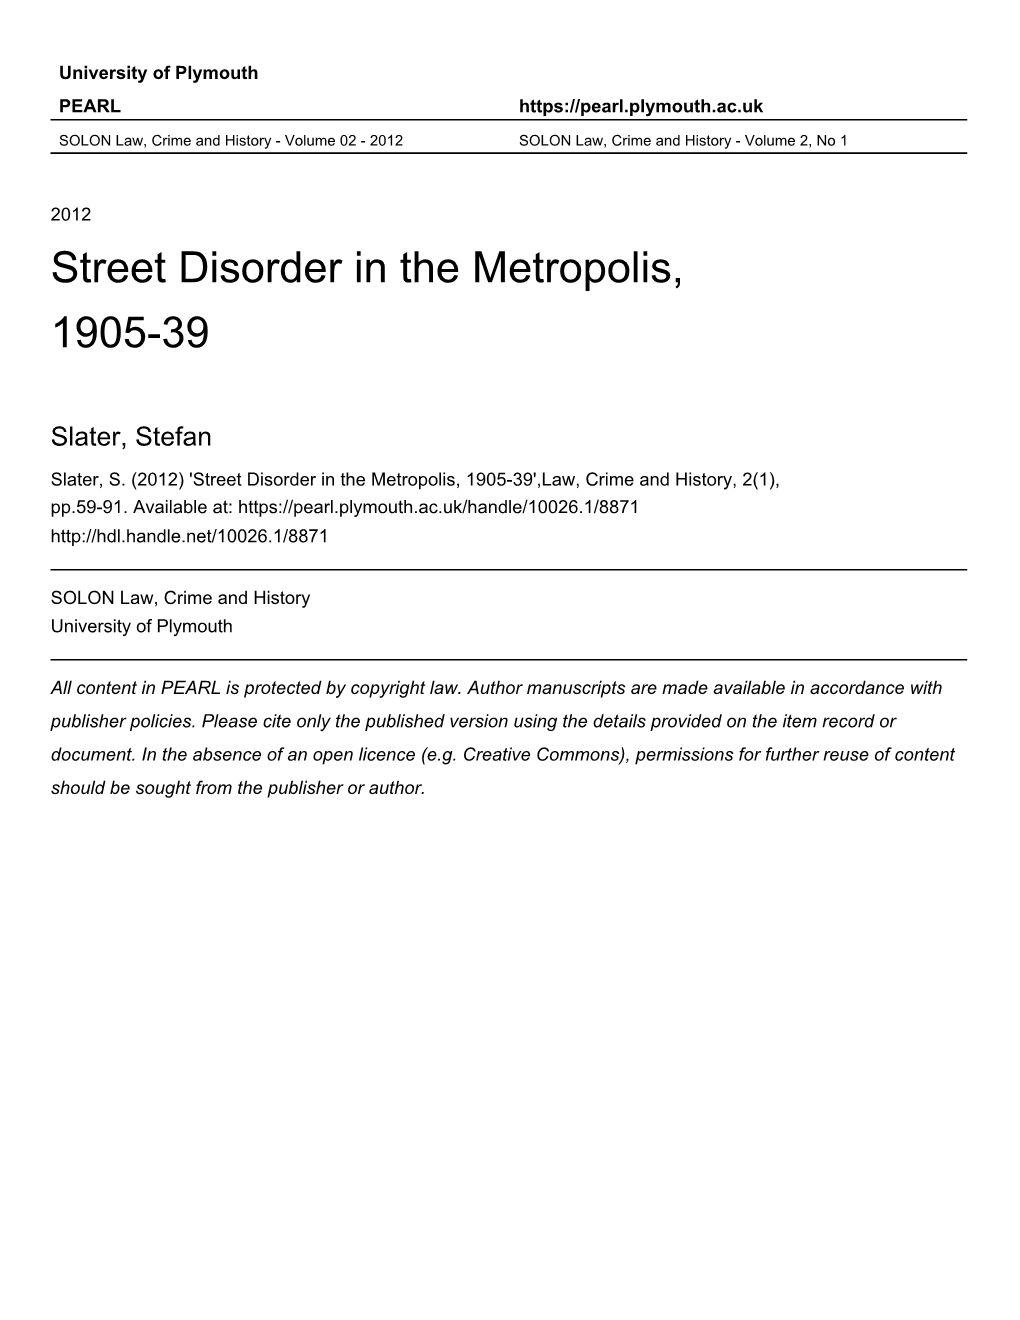 STREET DISORDER in the METROPOLIS, 1905-39 Stefan